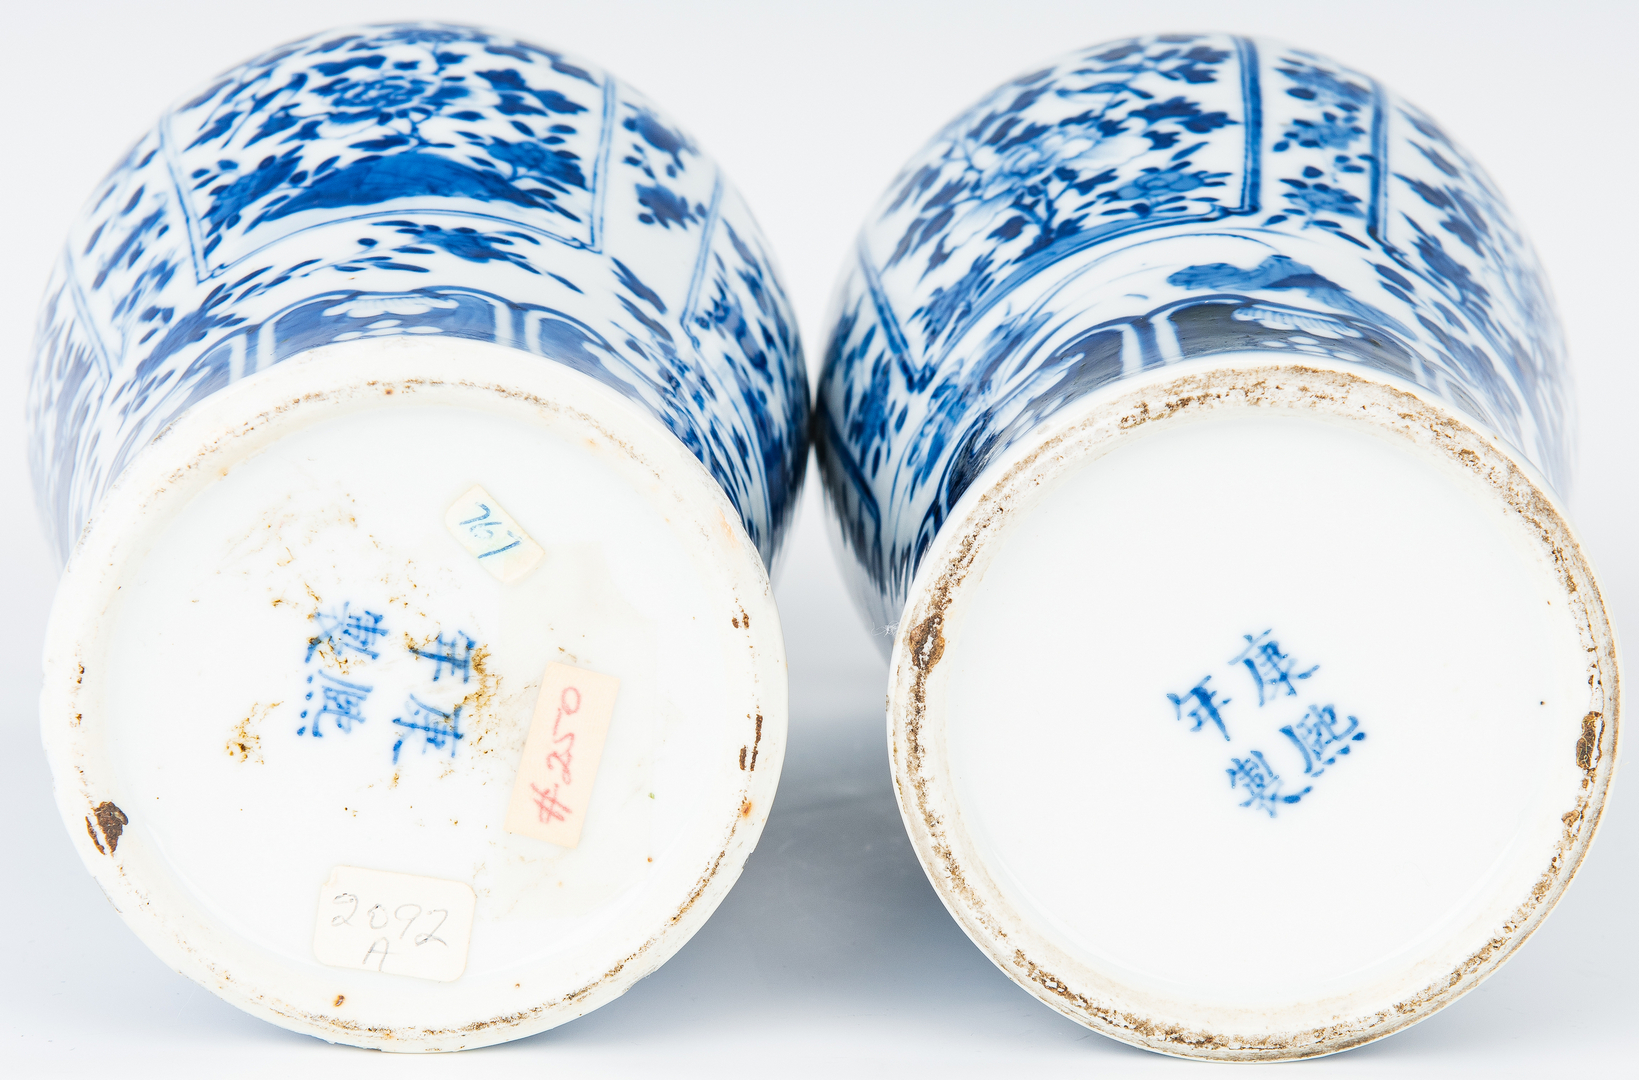 Lot 1001: Pr. Chinese Blue and White Vases plus Cloisonne Vase, 3 items